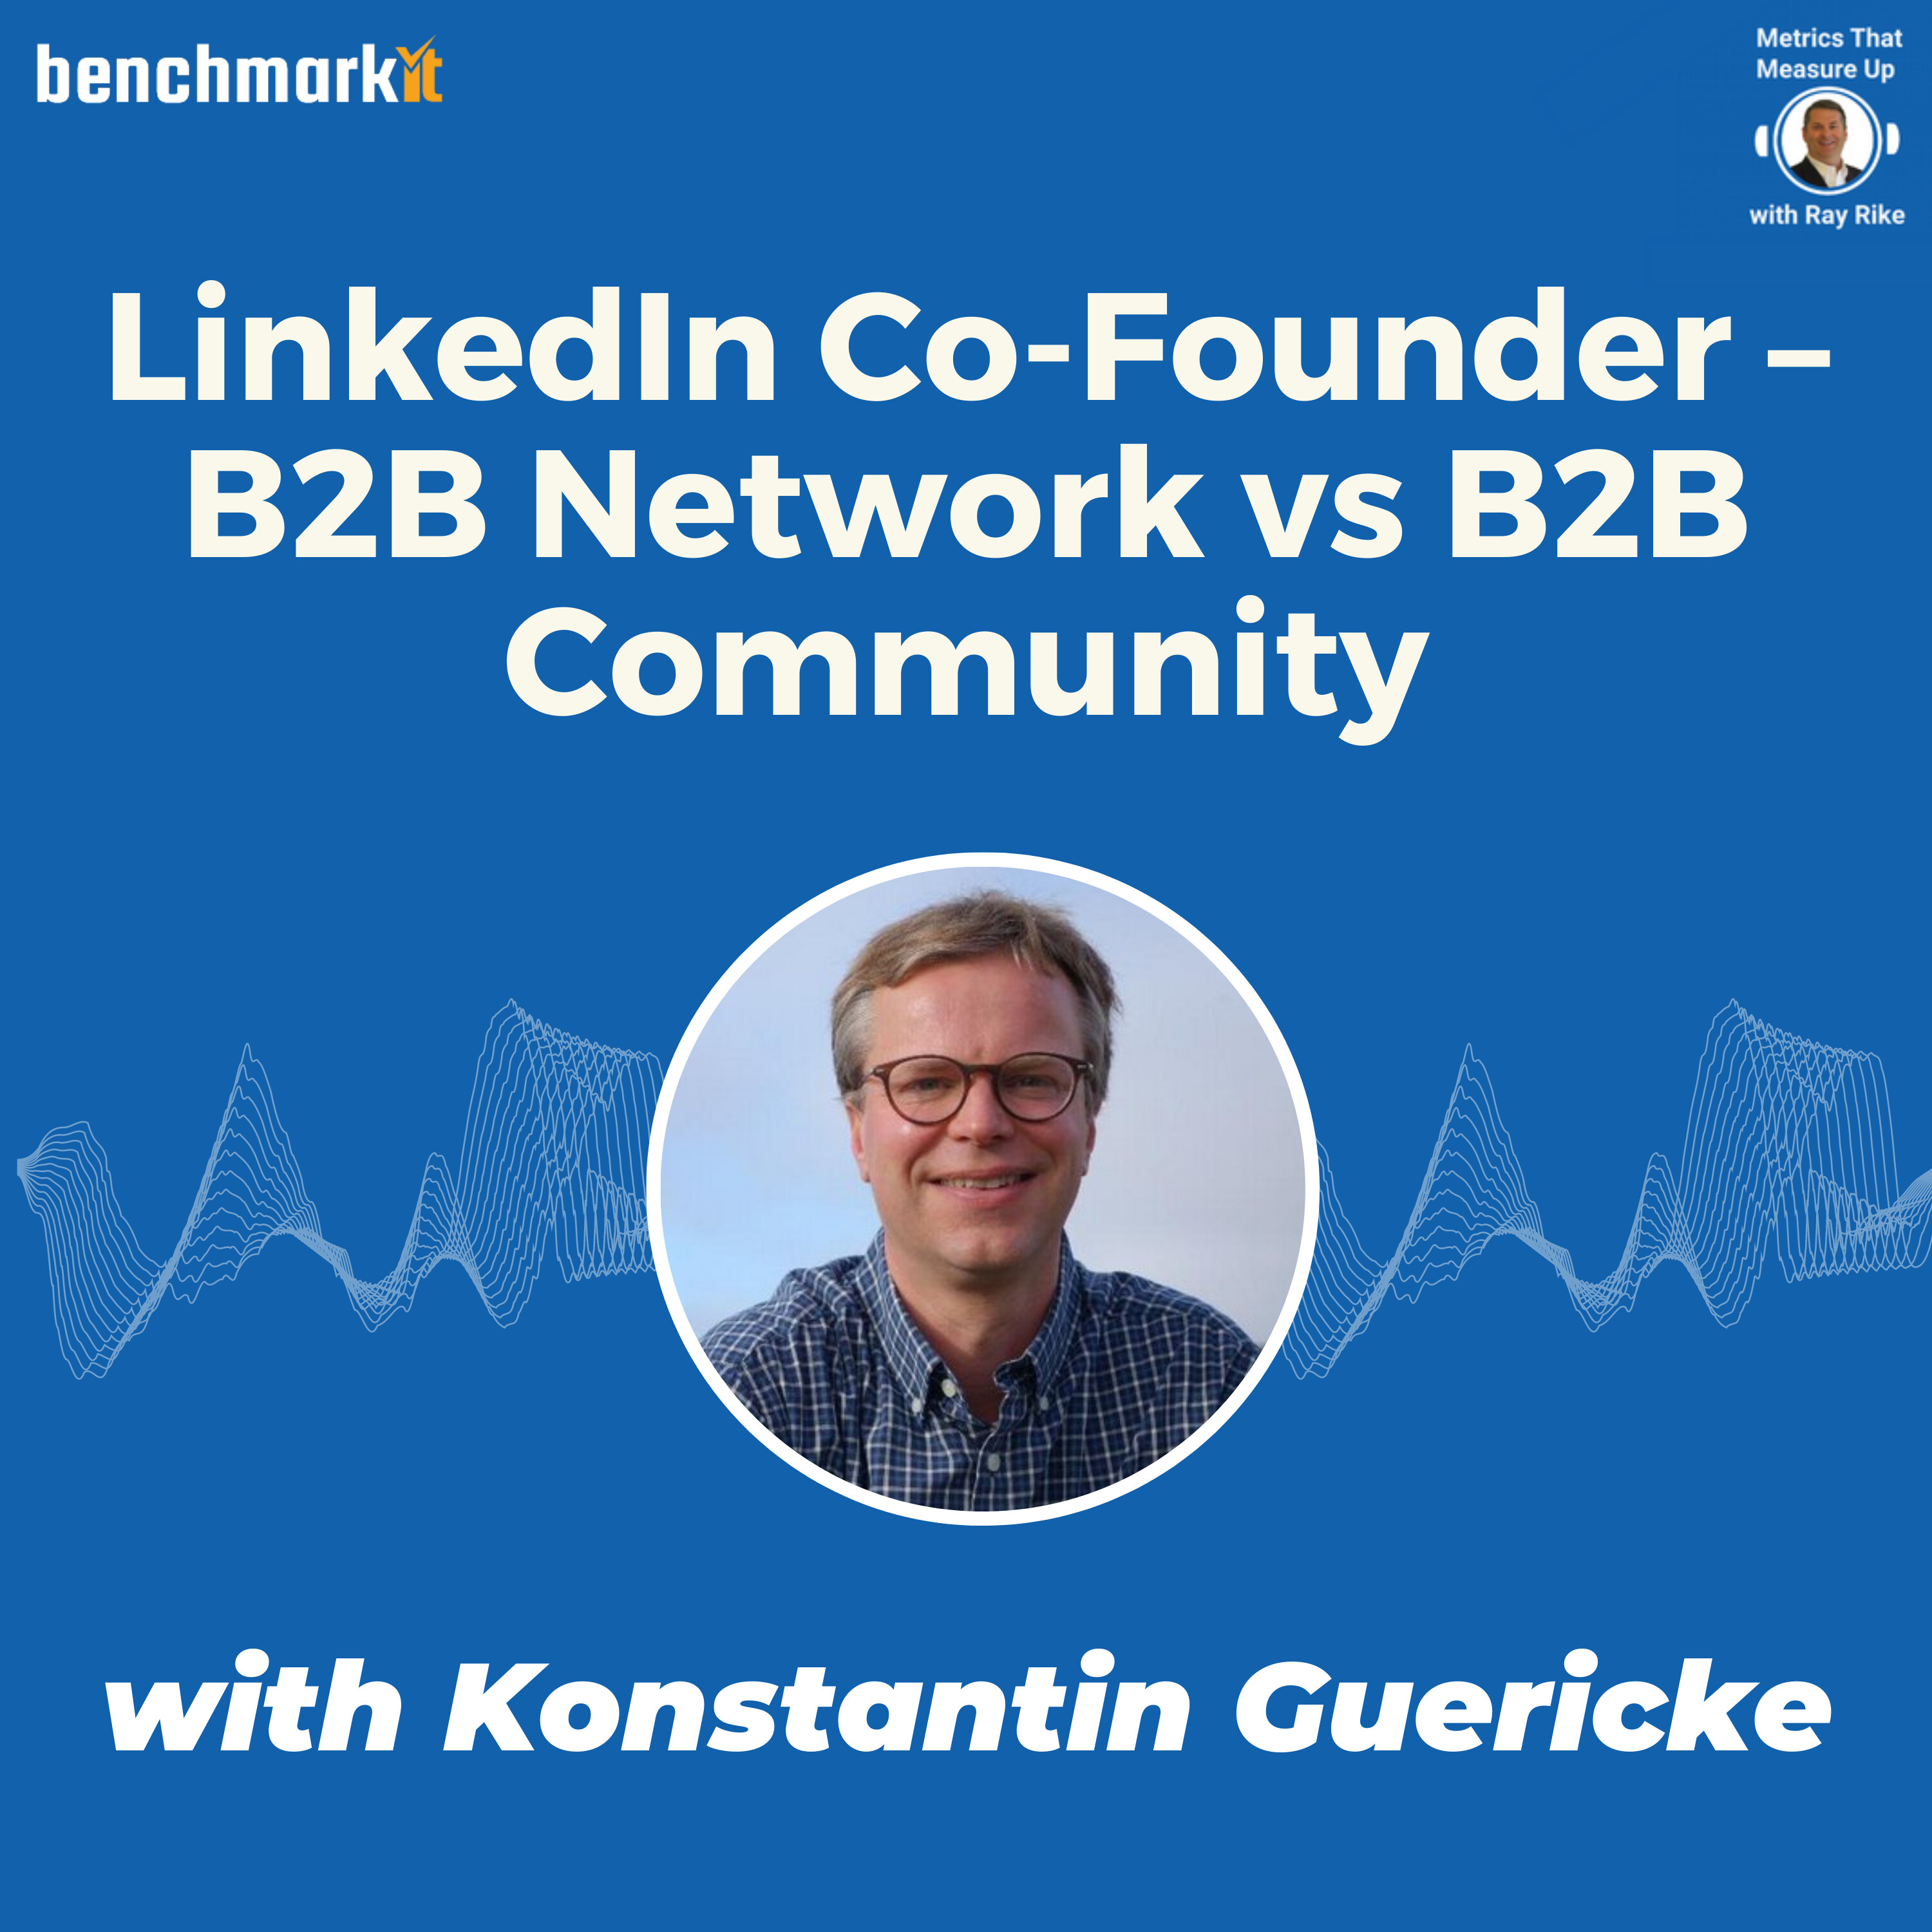 LinkedIn Co-founder Konstantin Guericke - The keys to building a long lasting B2B Network